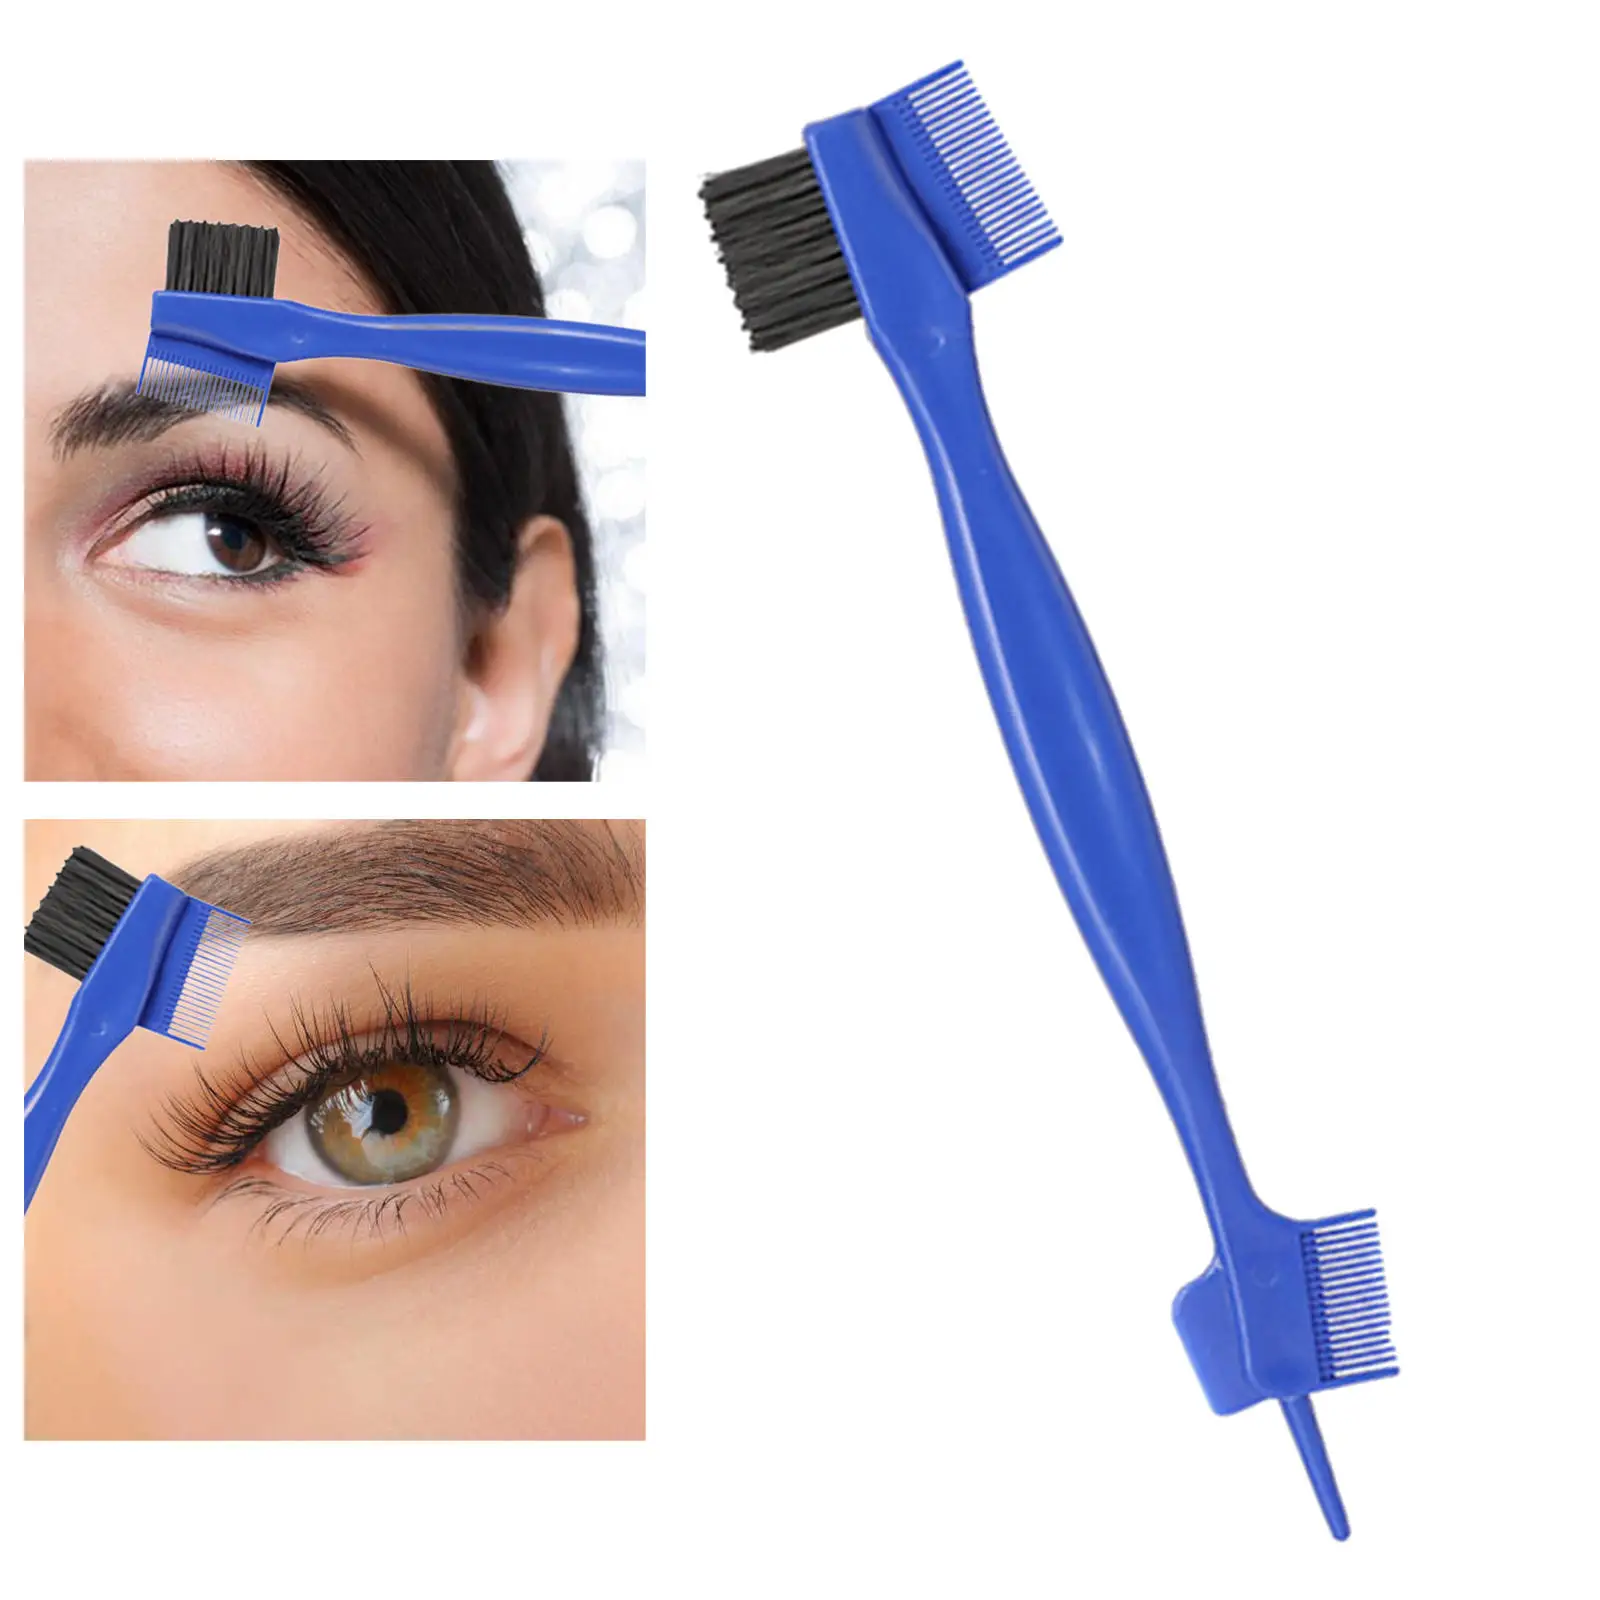 Sharper Multifunctional Double-Sided Eyebrow Brush Comb for Makeup Women Travel Girls